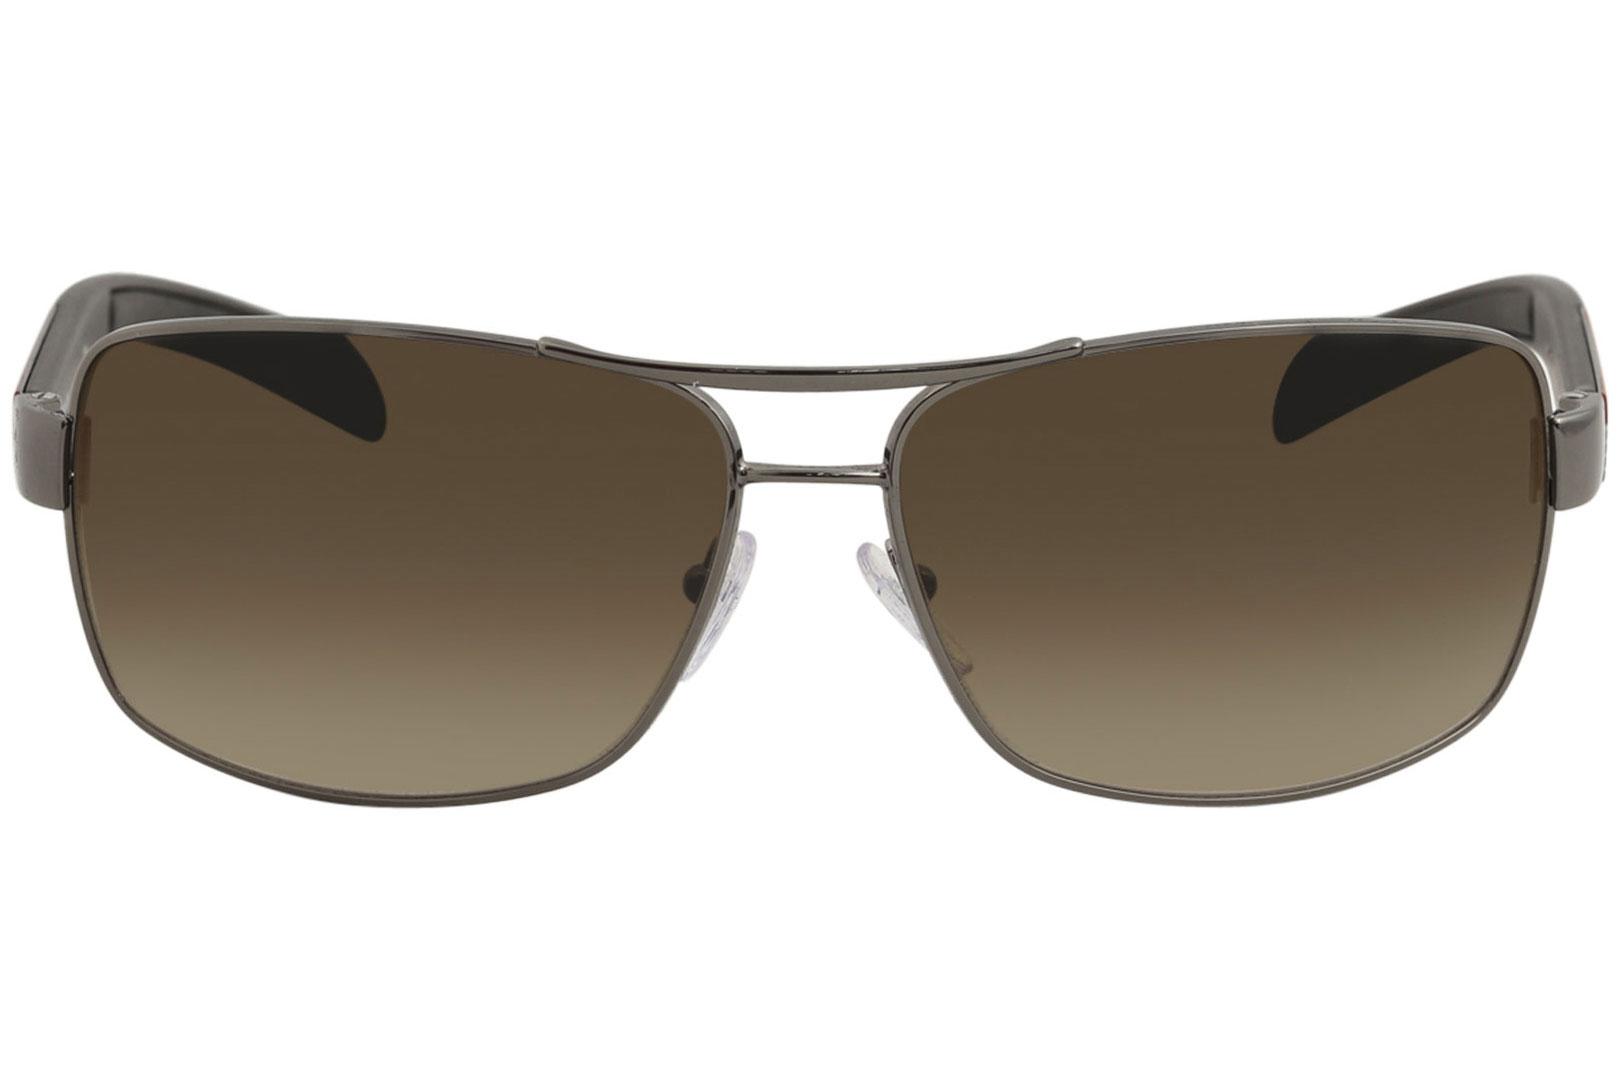 Sunglasses Prada Sport | Navy blue | Gomez.pl/en